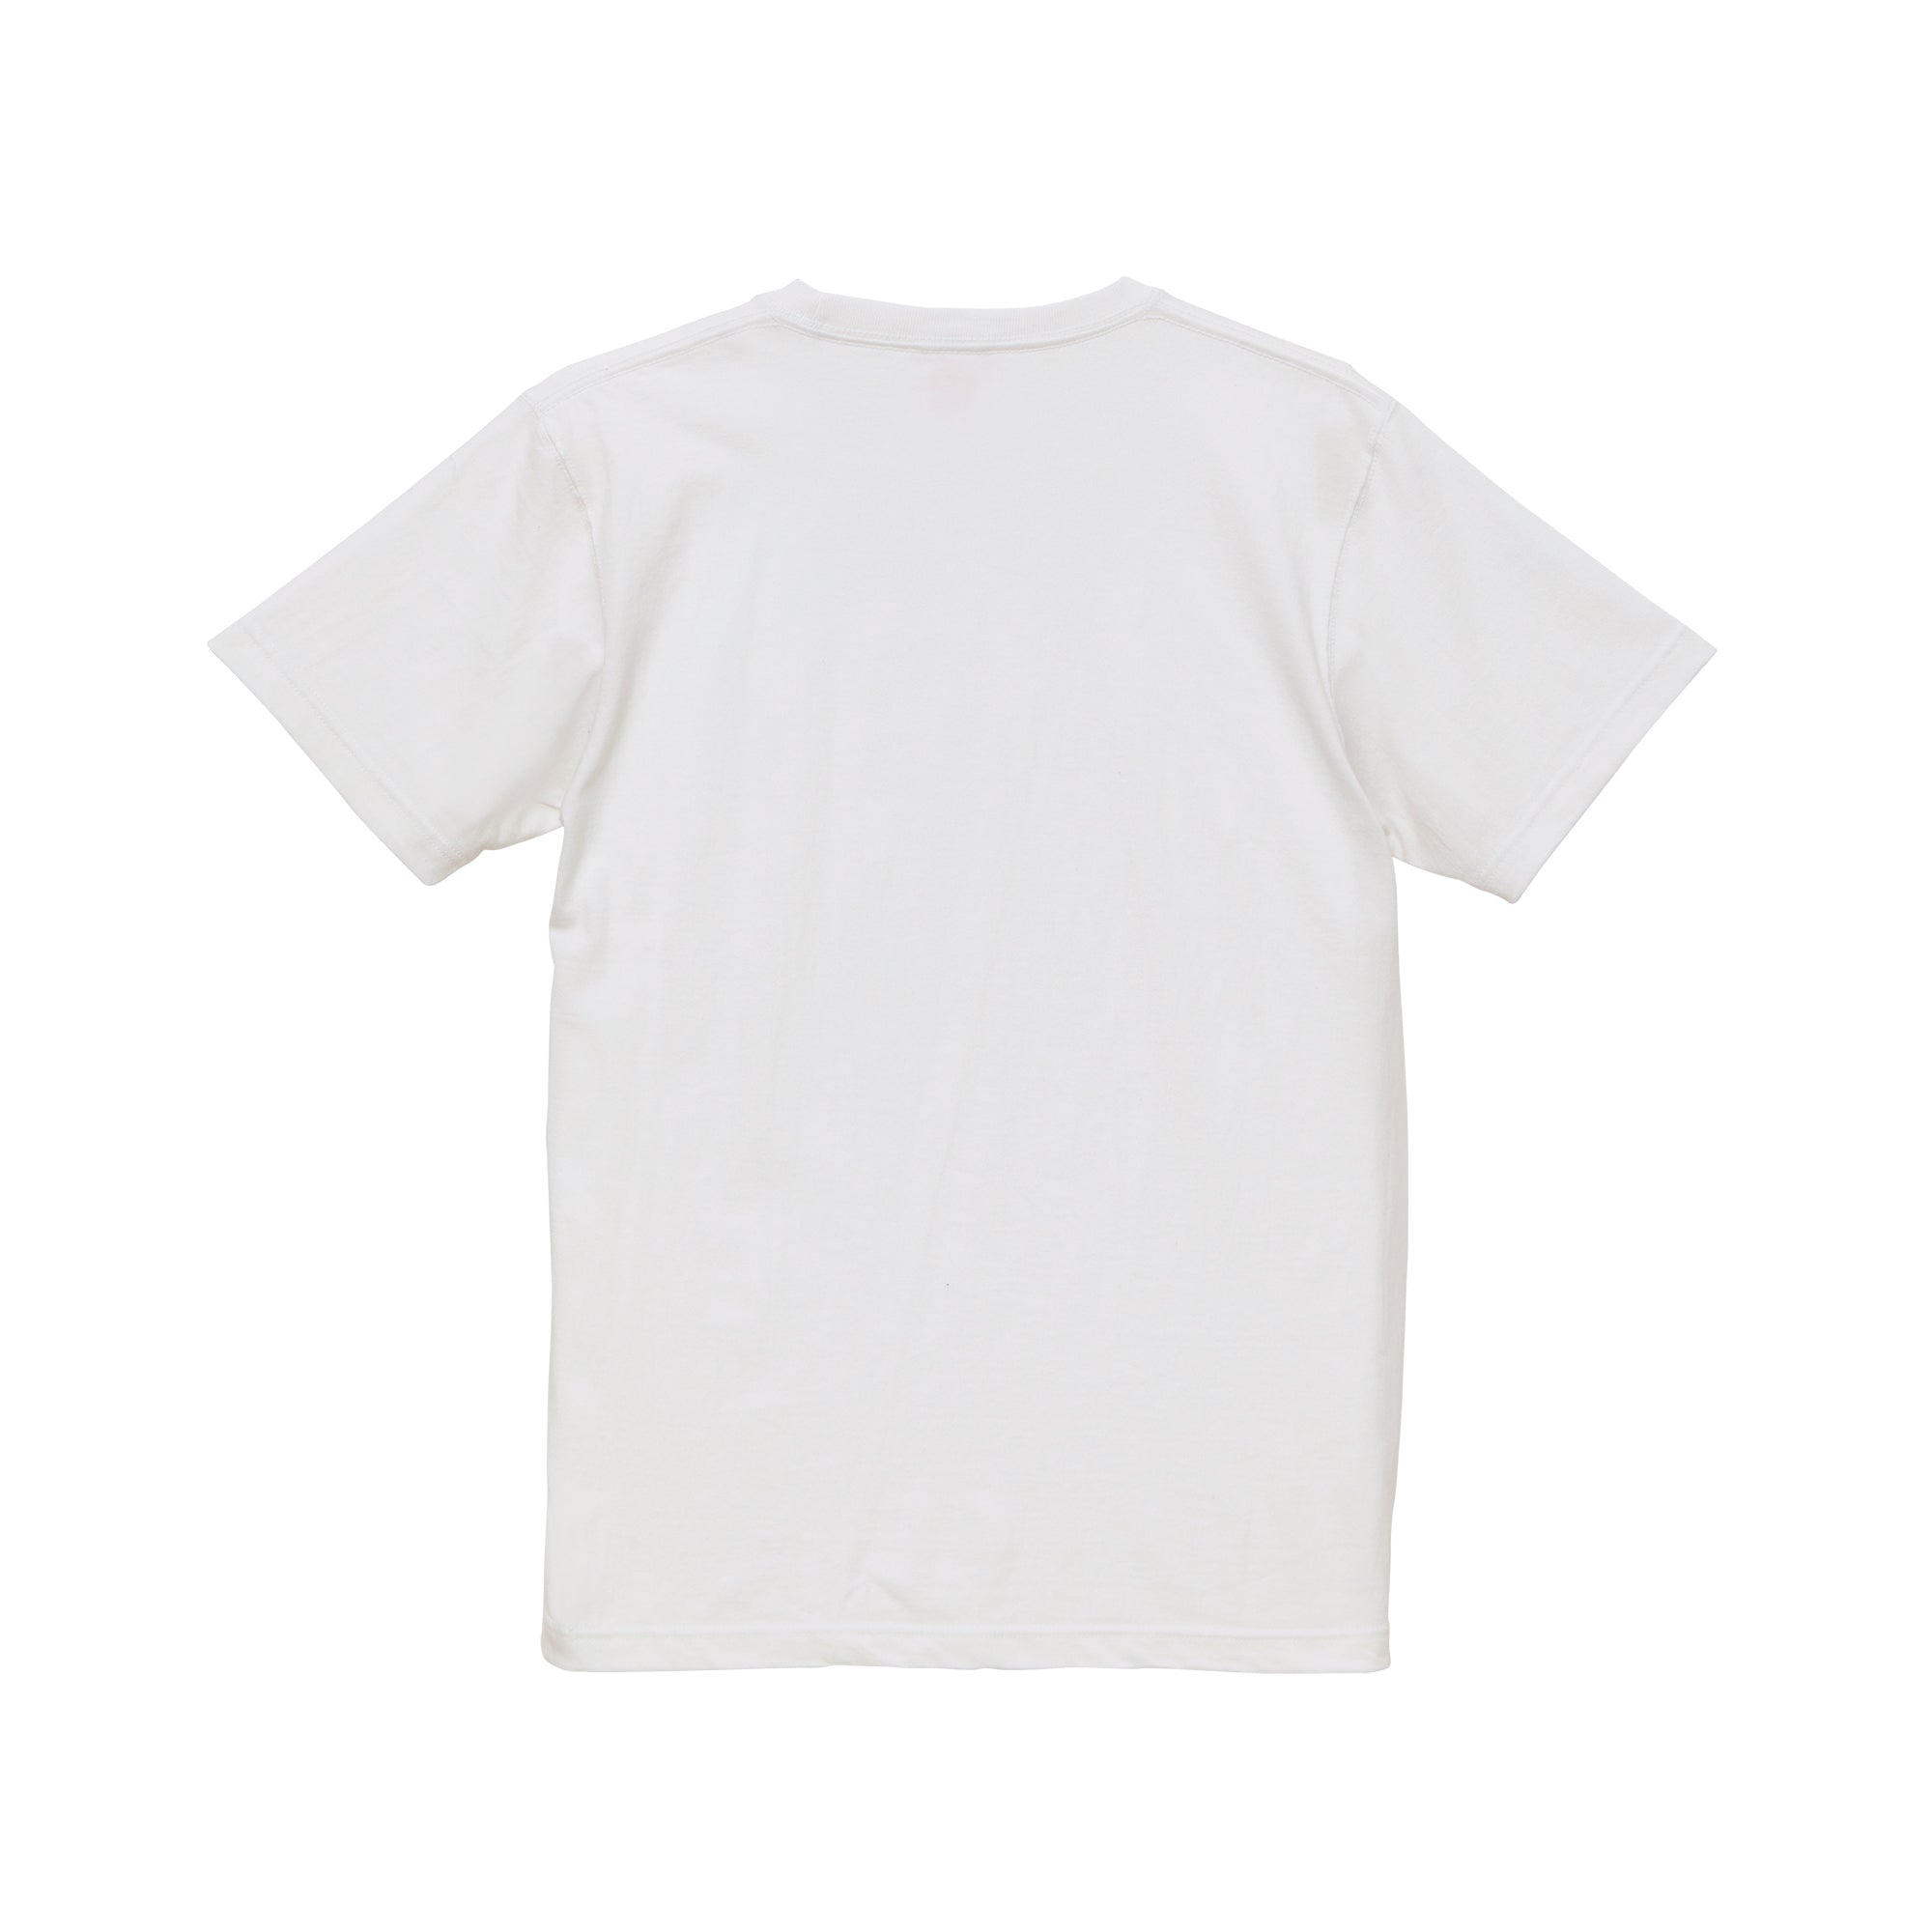 4253 - Super Heavyweight 7.1oz Pocket T-shirt - White